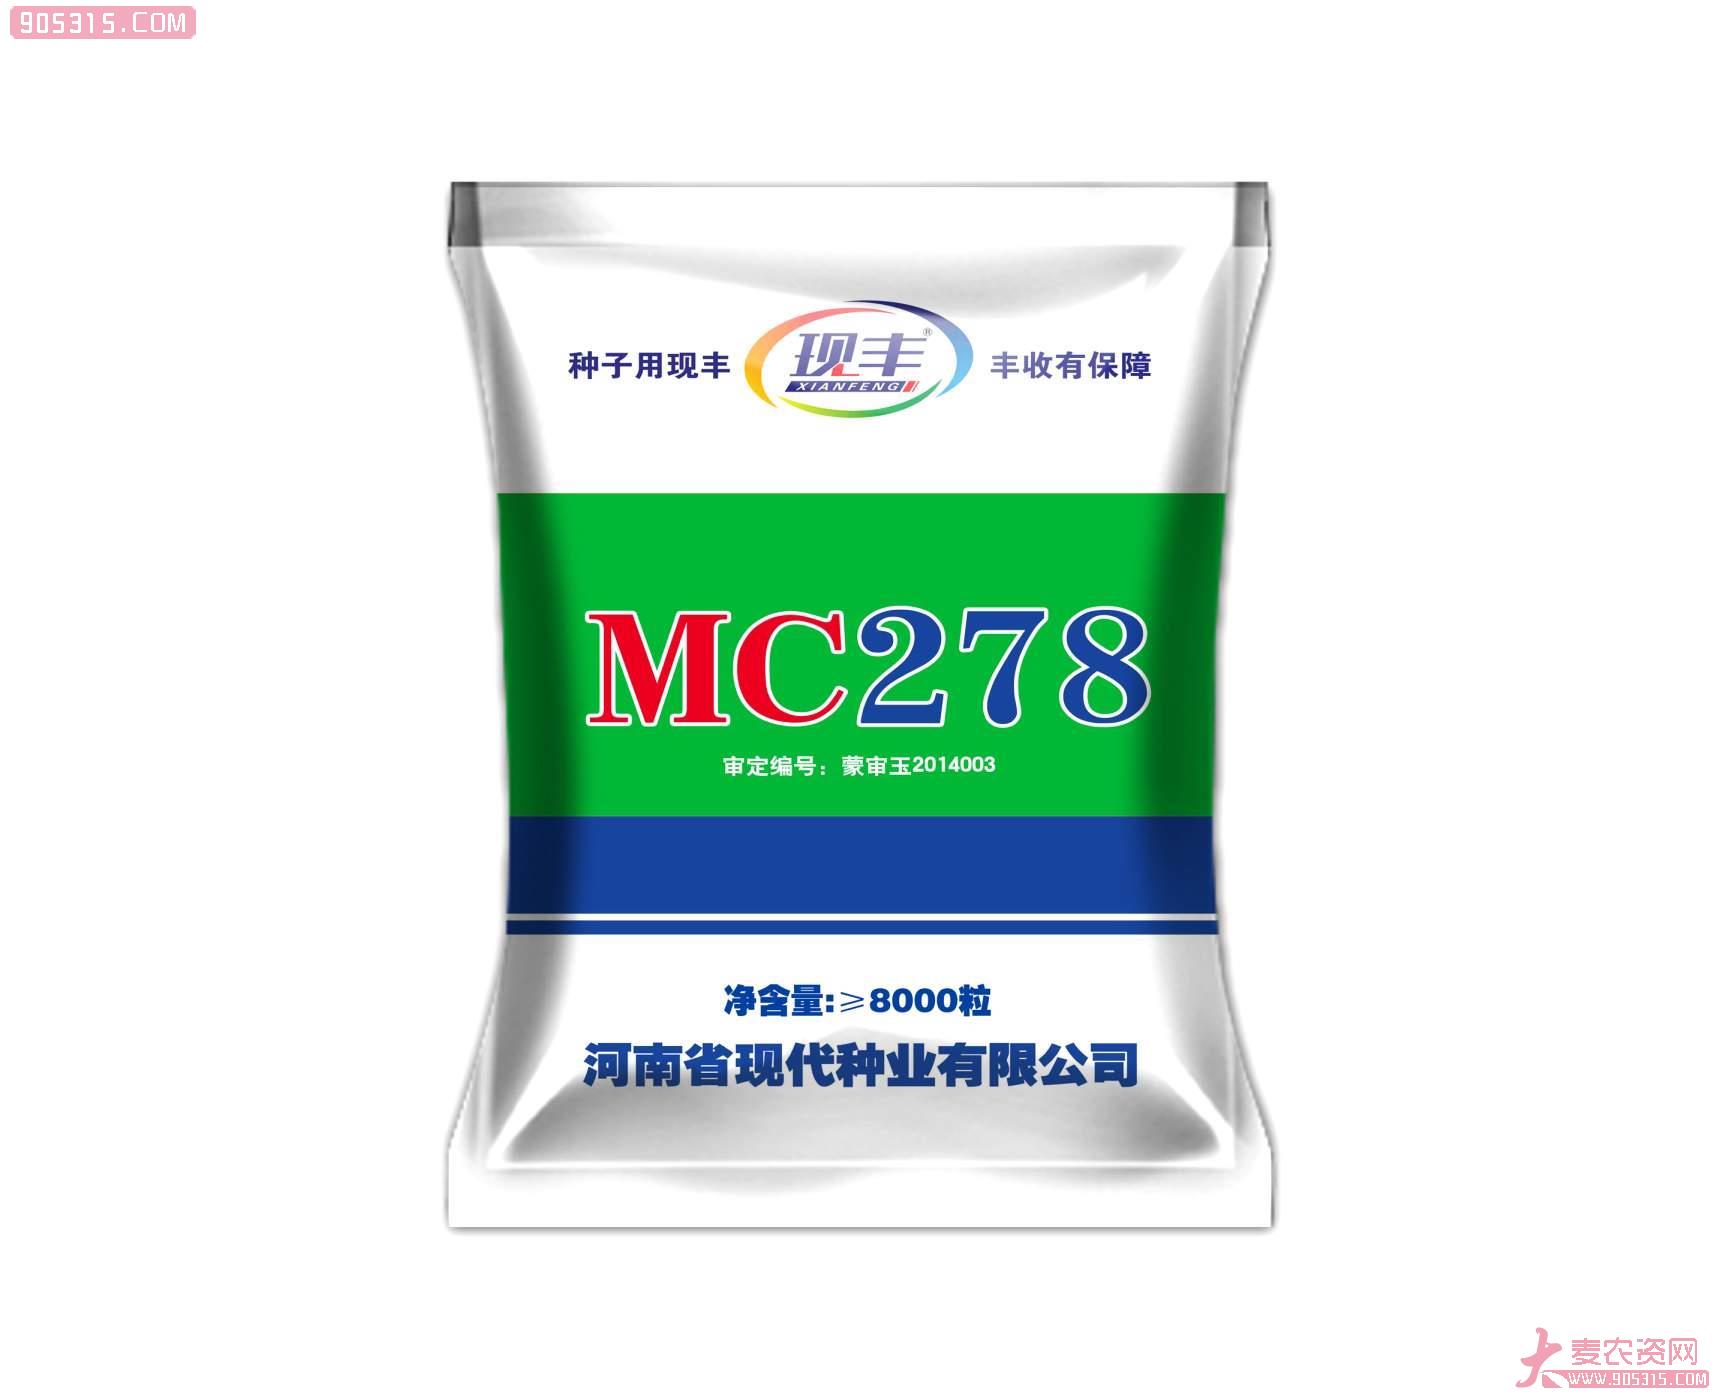 MC278-8000粒农资招商产品